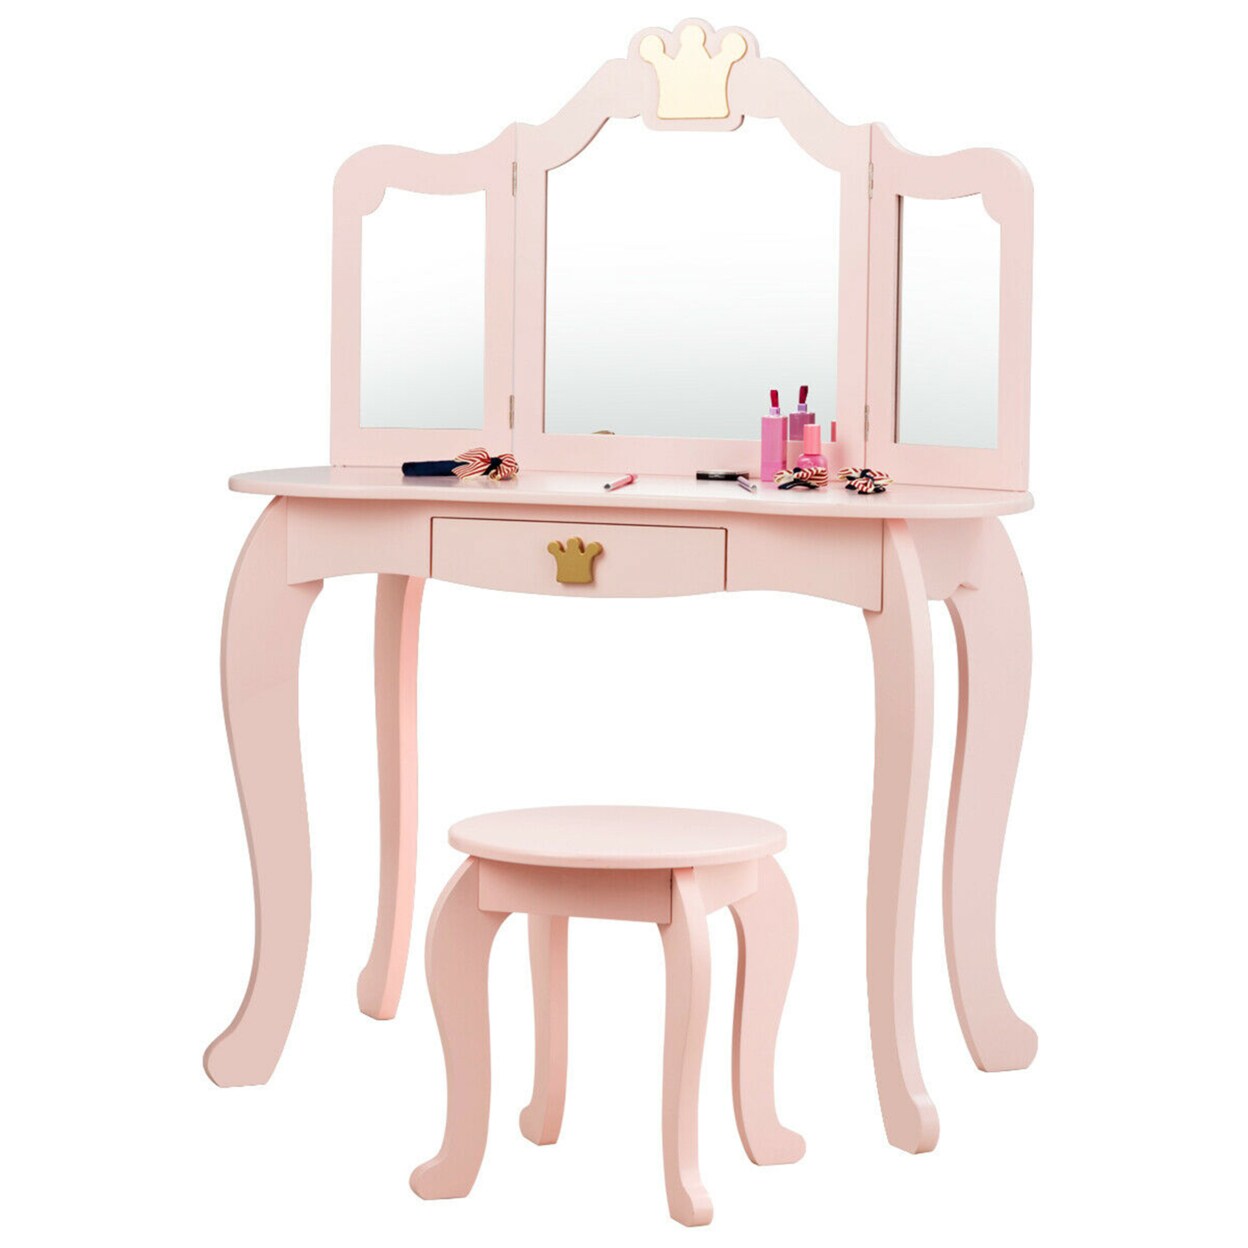 Gymax Kids Makeup Dressing Table Chair Set Princess Vanity and Tri-folding Mirror Pink